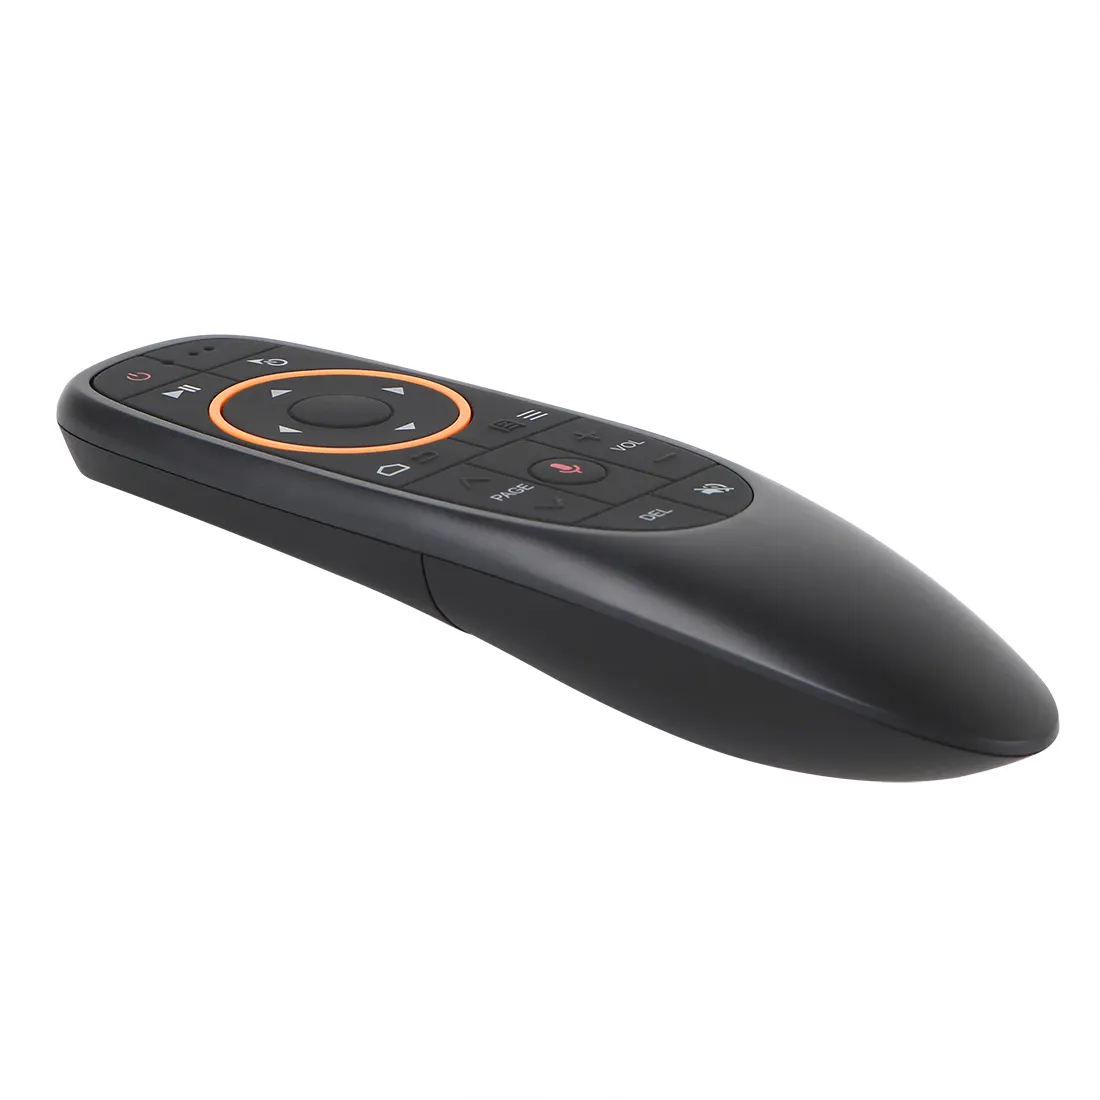 2.4Ghz wireless remote control with voice control wireless keyboard G10S